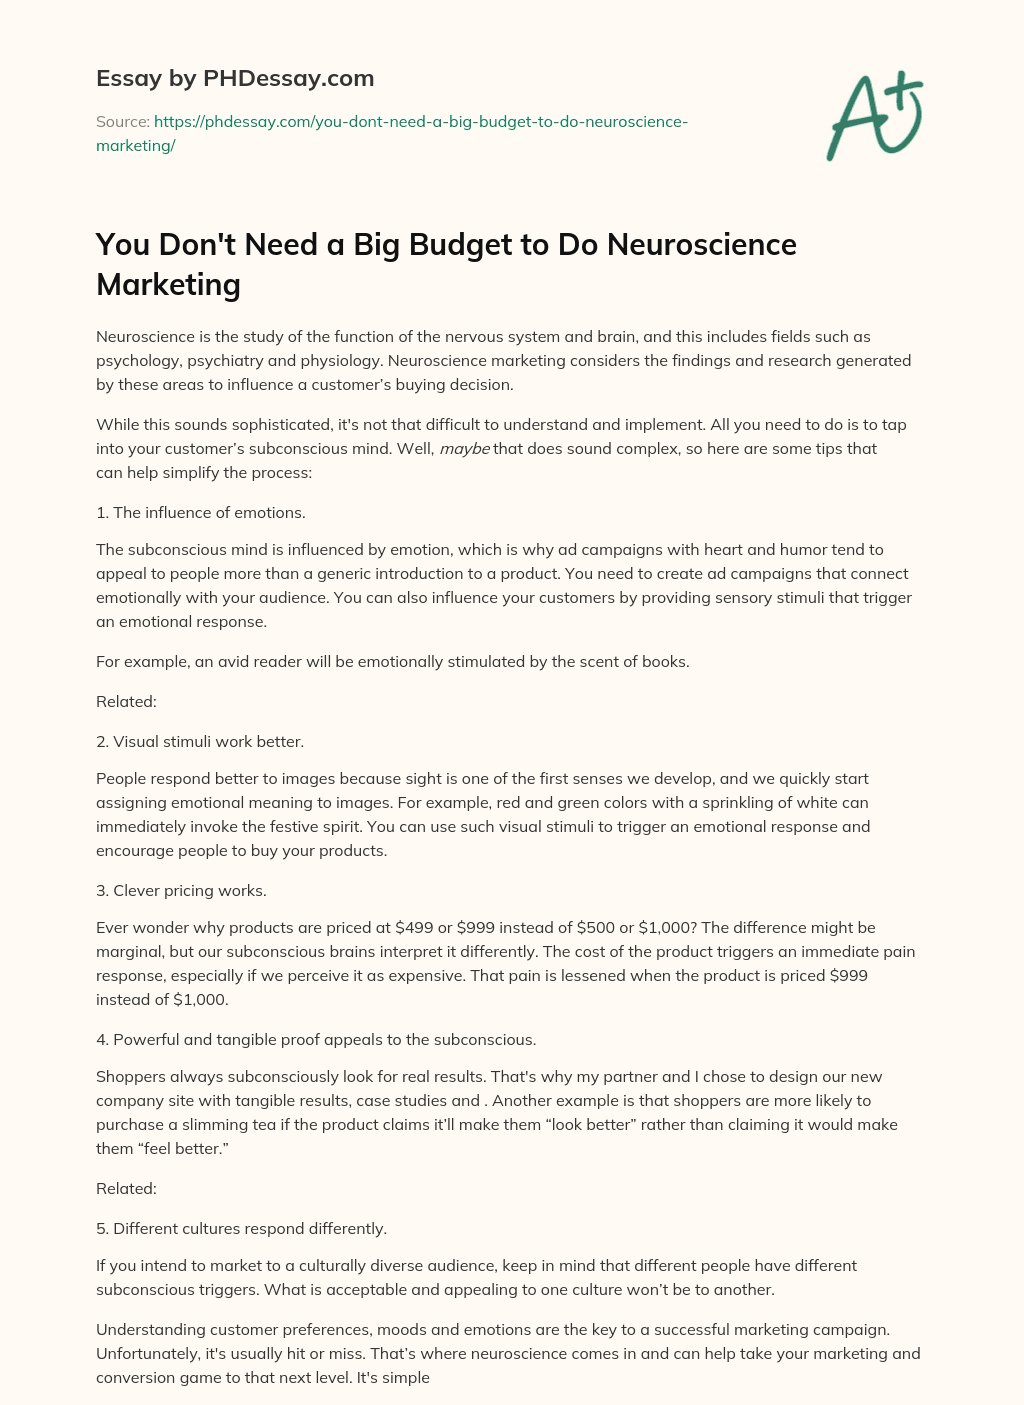 You Don’t Need a Big Budget to Do Neuroscience Marketing essay